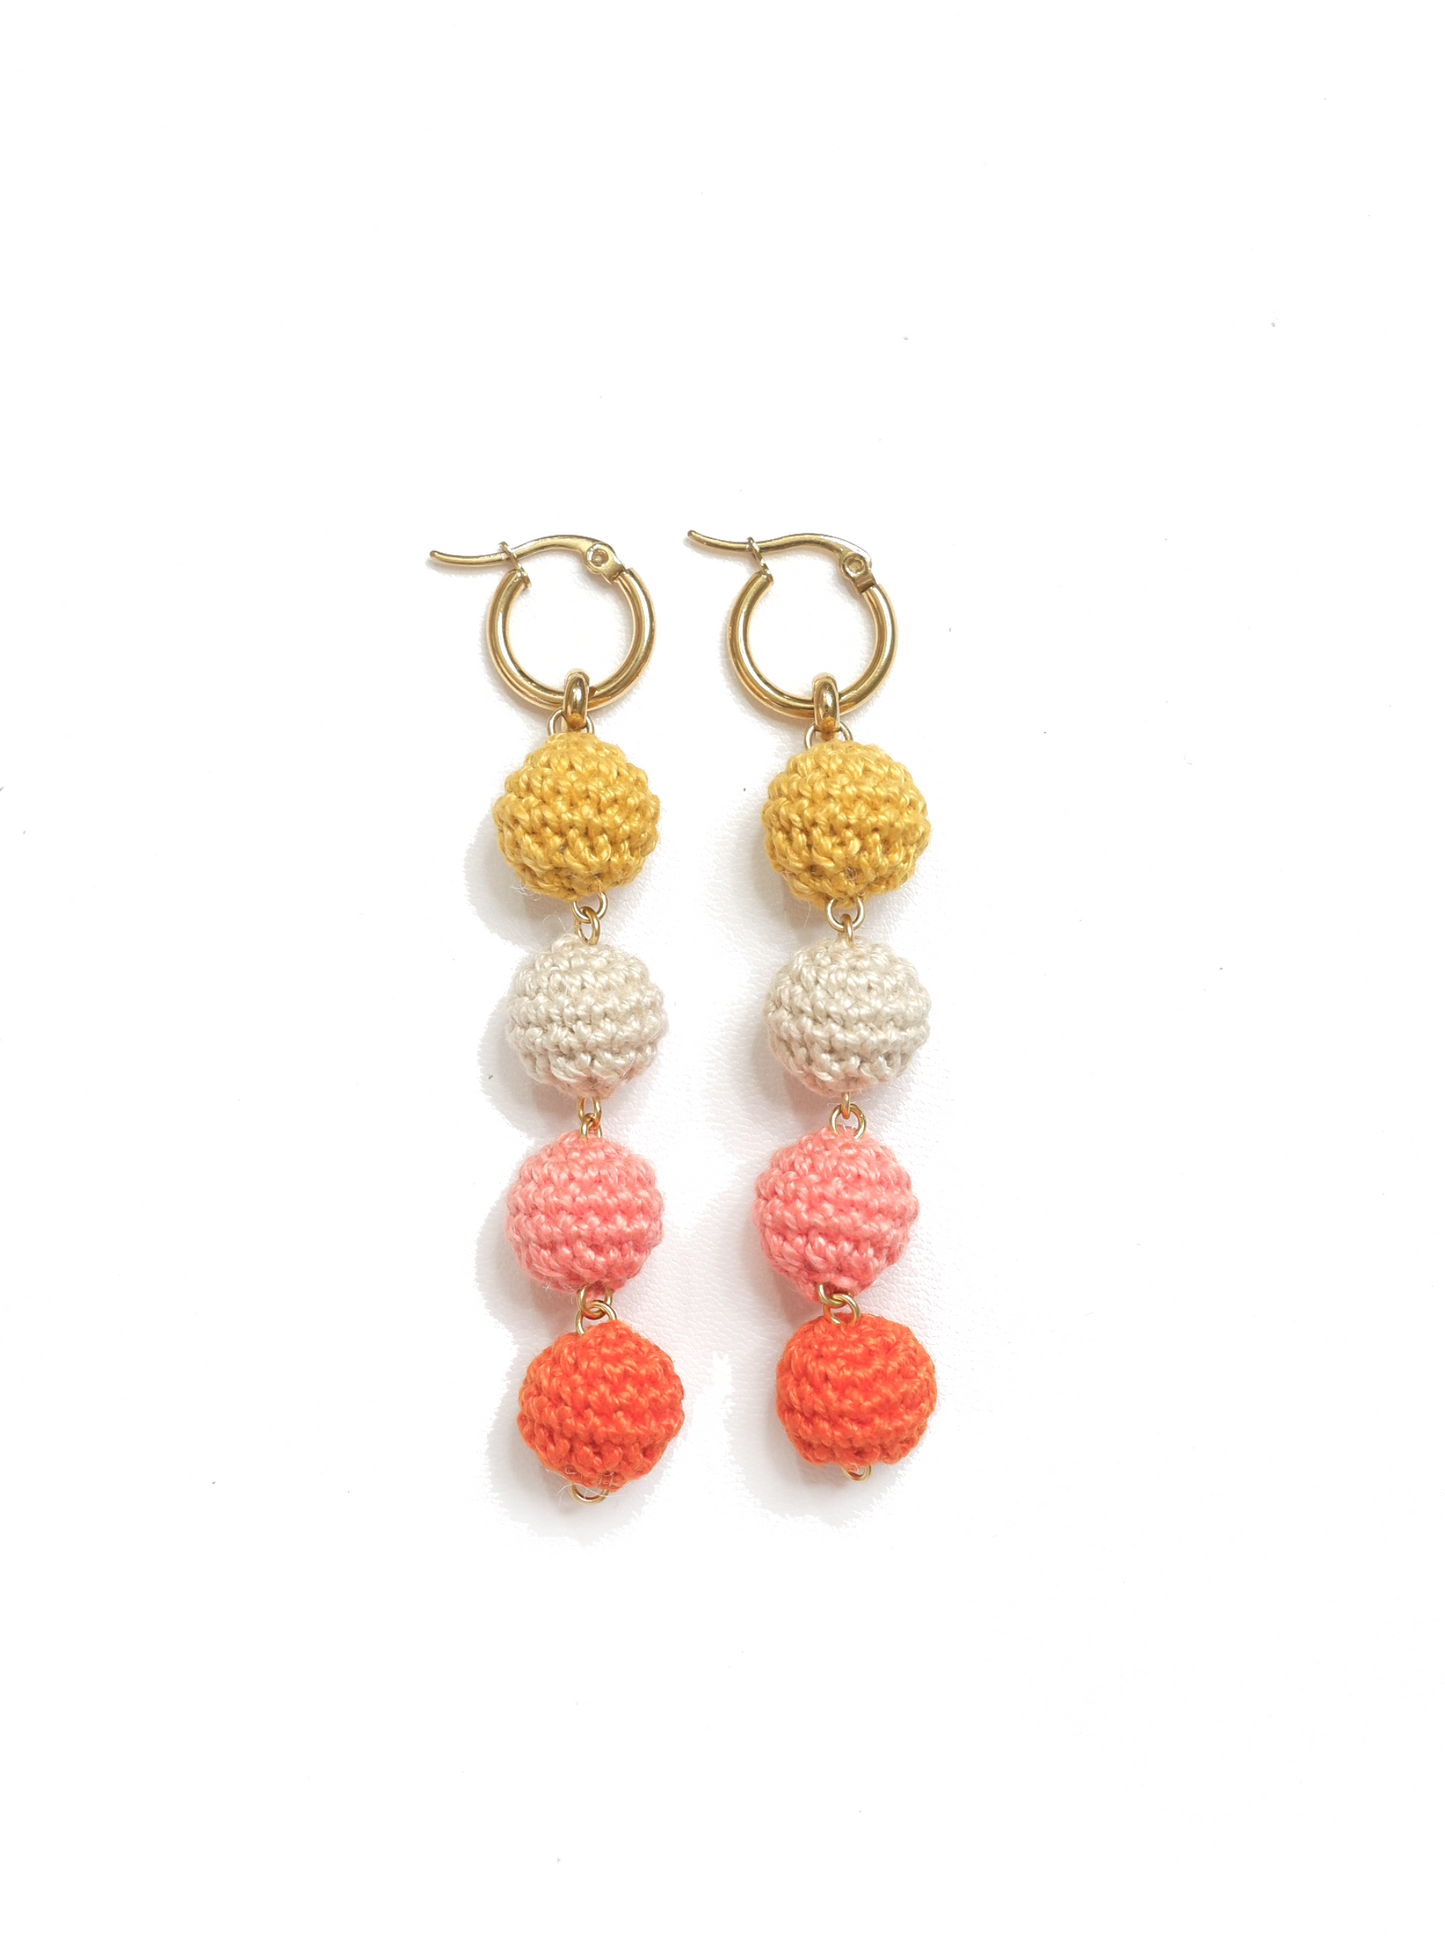 Aria bonbon drop earrings- golden hour